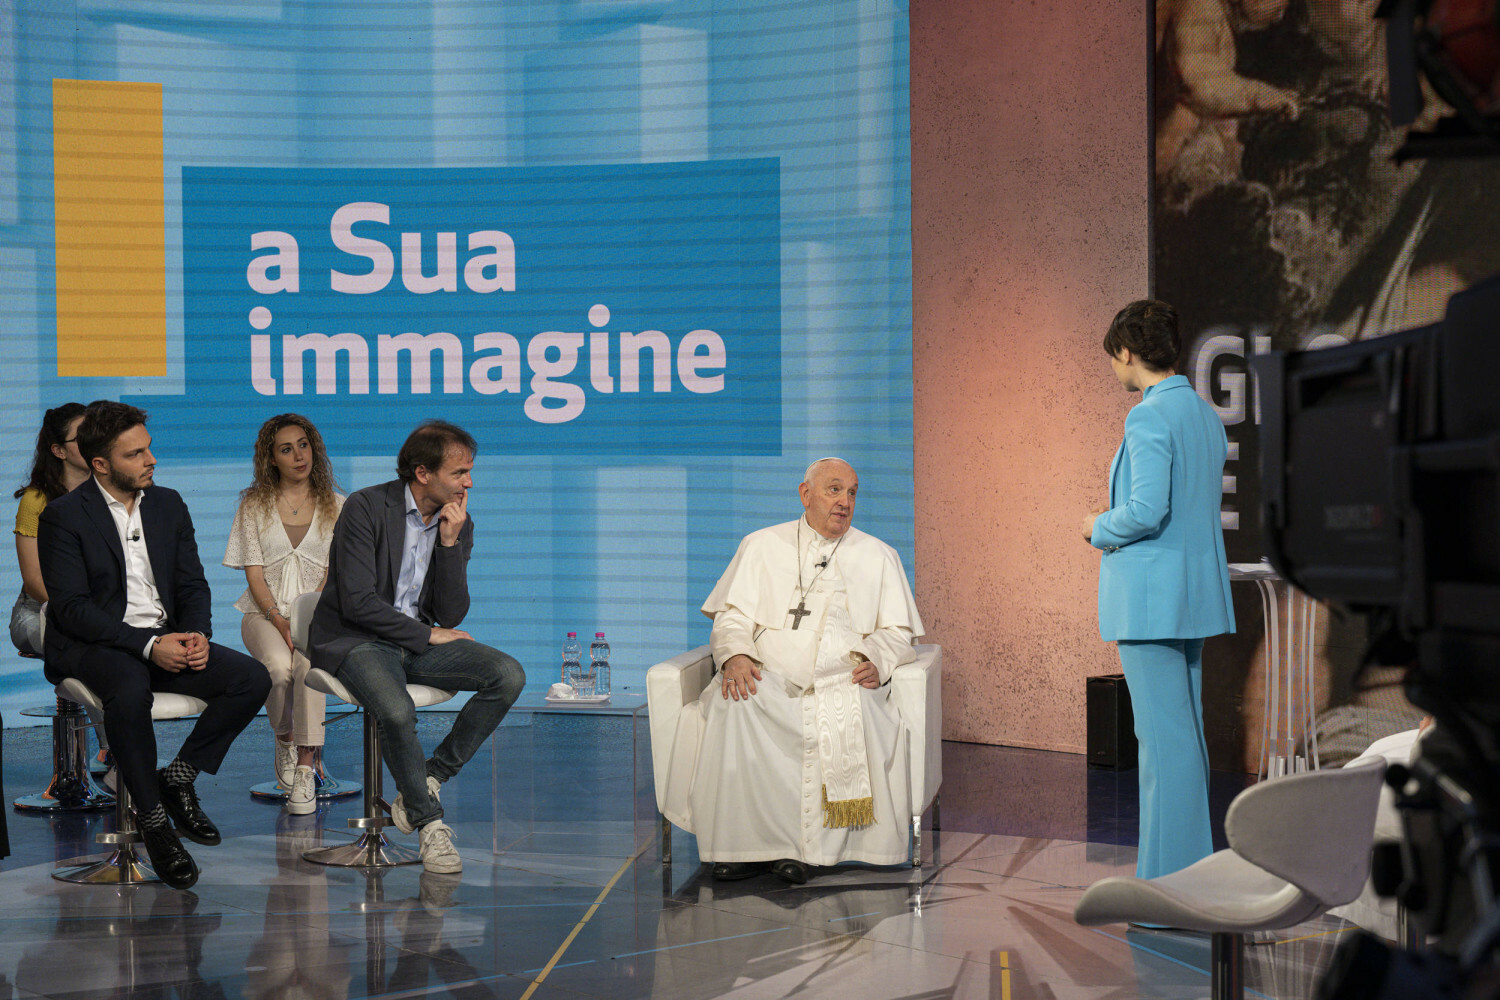 Papież Franciszek w studiu telewizji RAI